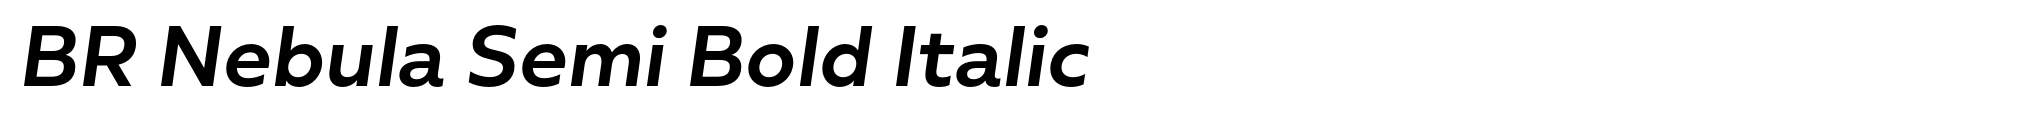 BR Nebula Semi Bold Italic image